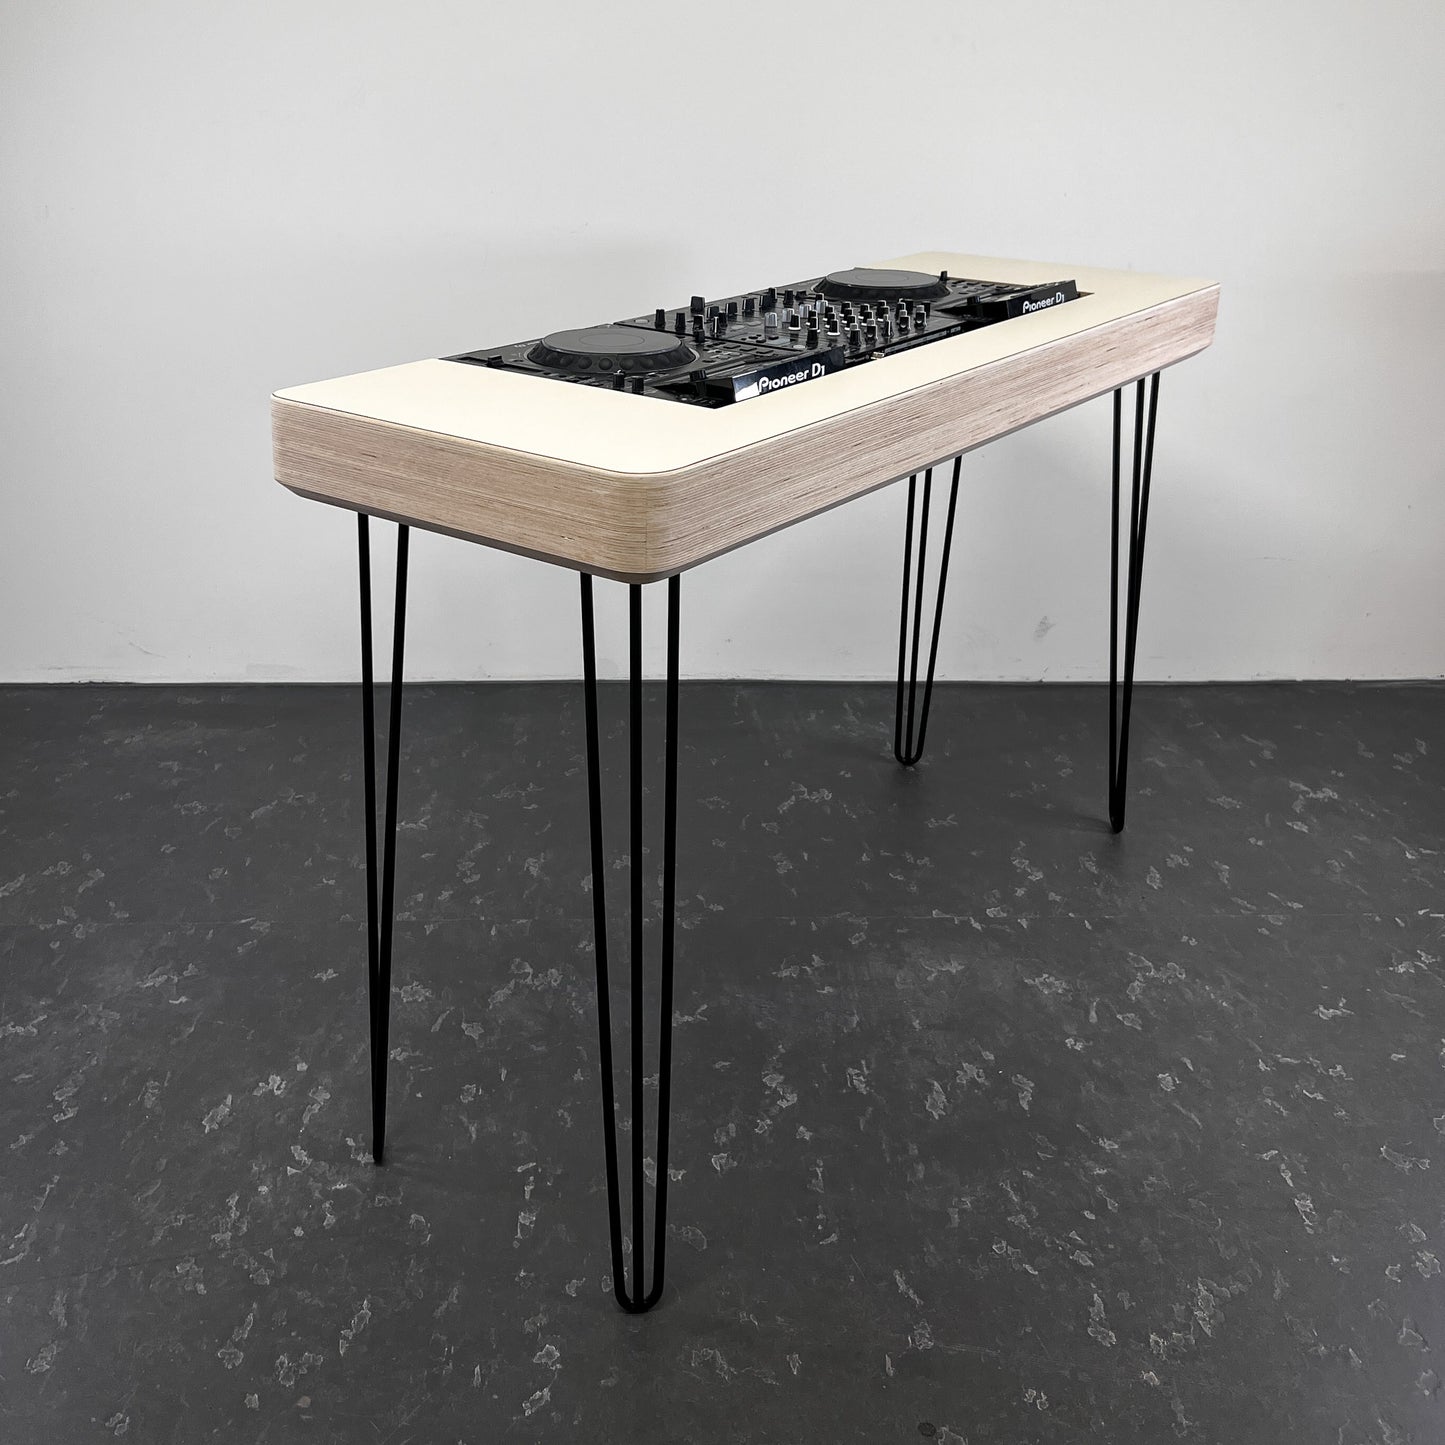 Designer DJ table made of multiplex